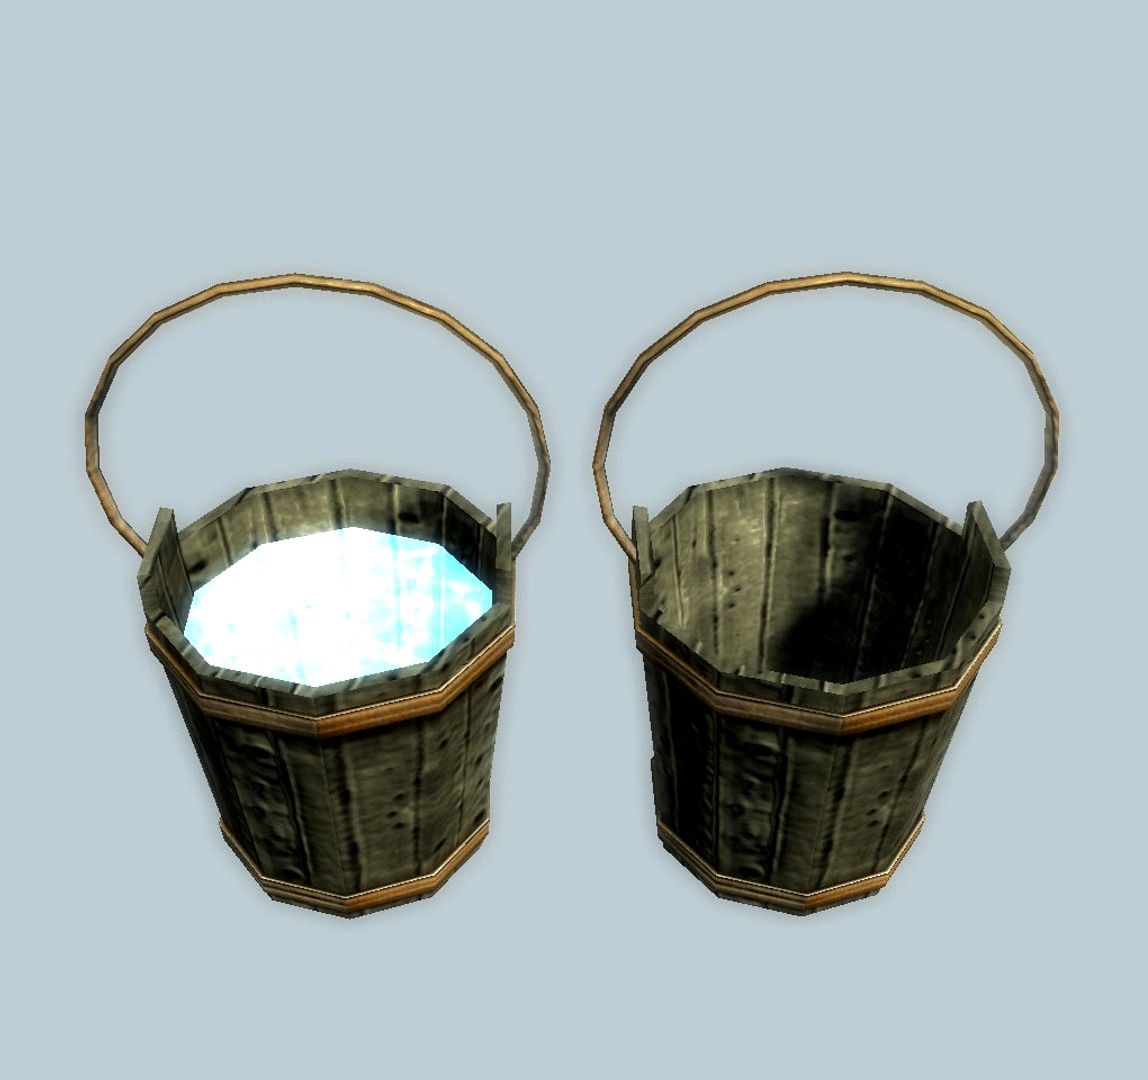 Bucket bucket With Water